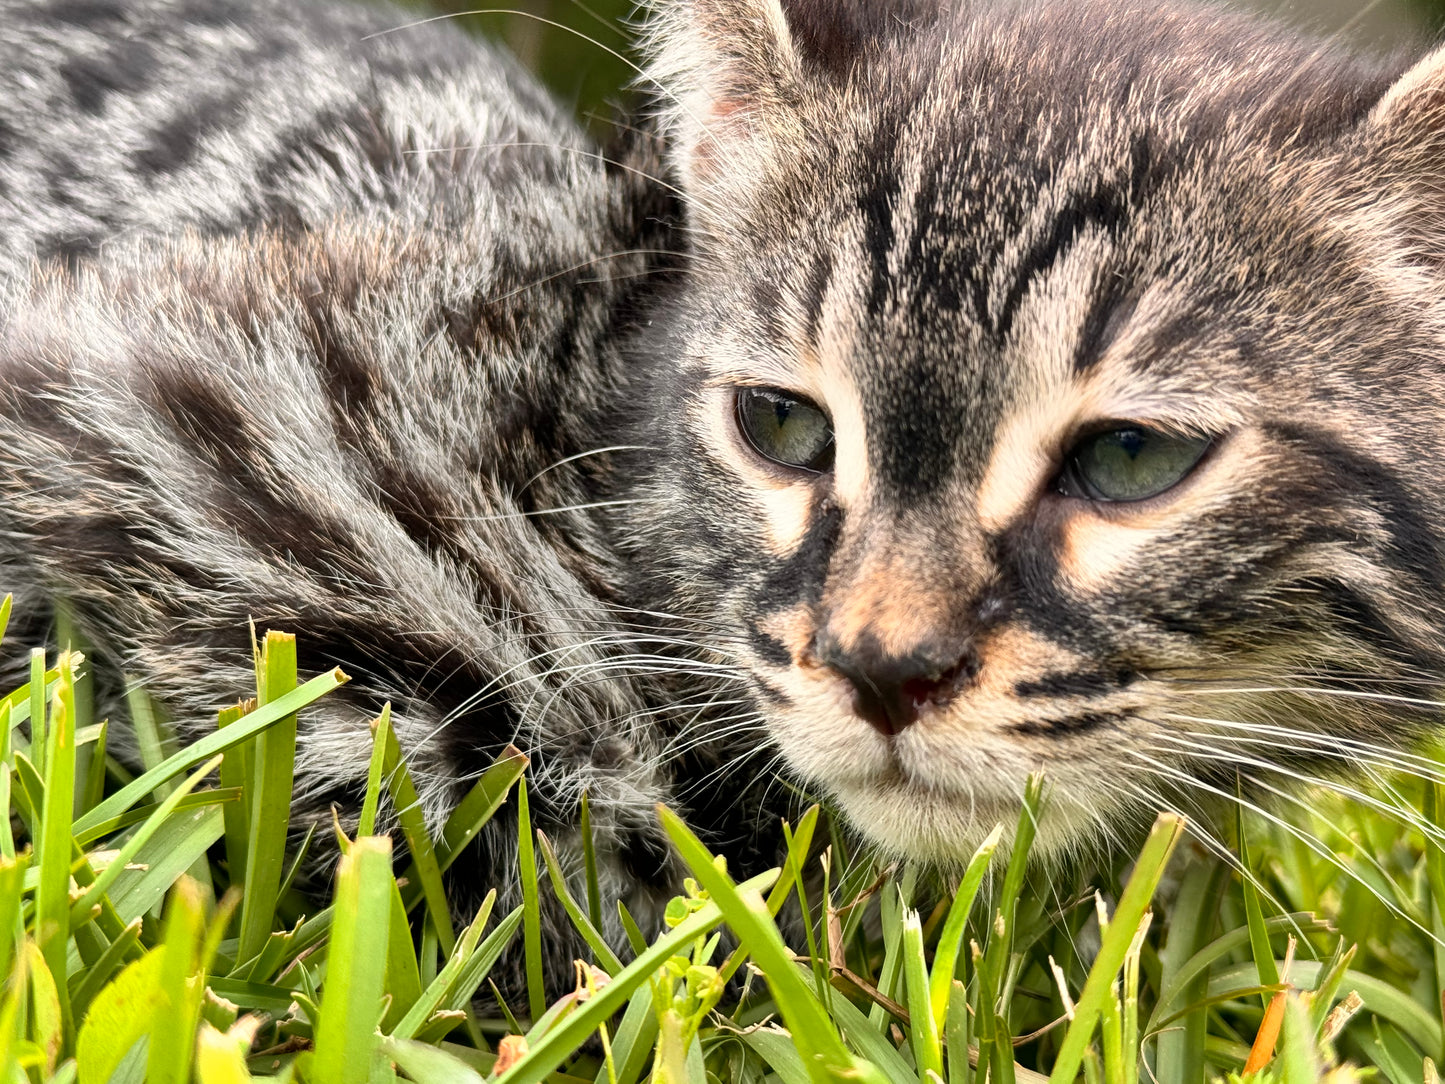 G2 Charcoal & Silver Rosette Male Bengal Kitten